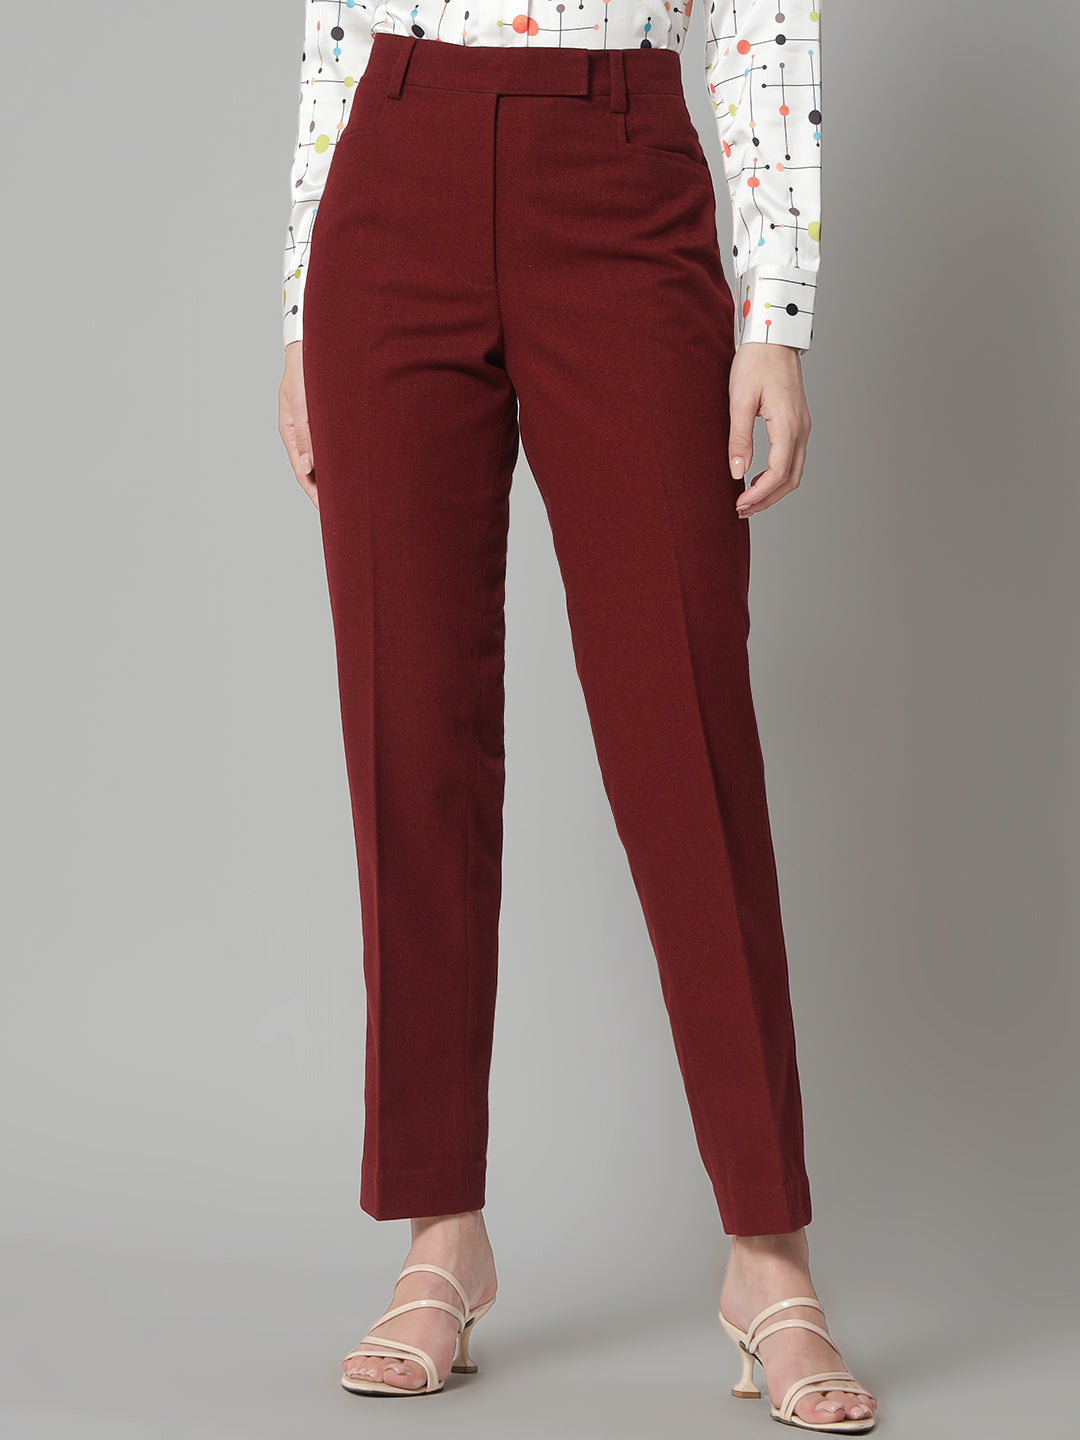 Plus Size New Italian Ladies Women Elastic Waist Cotton Summer Trousers  Joggers | eBay